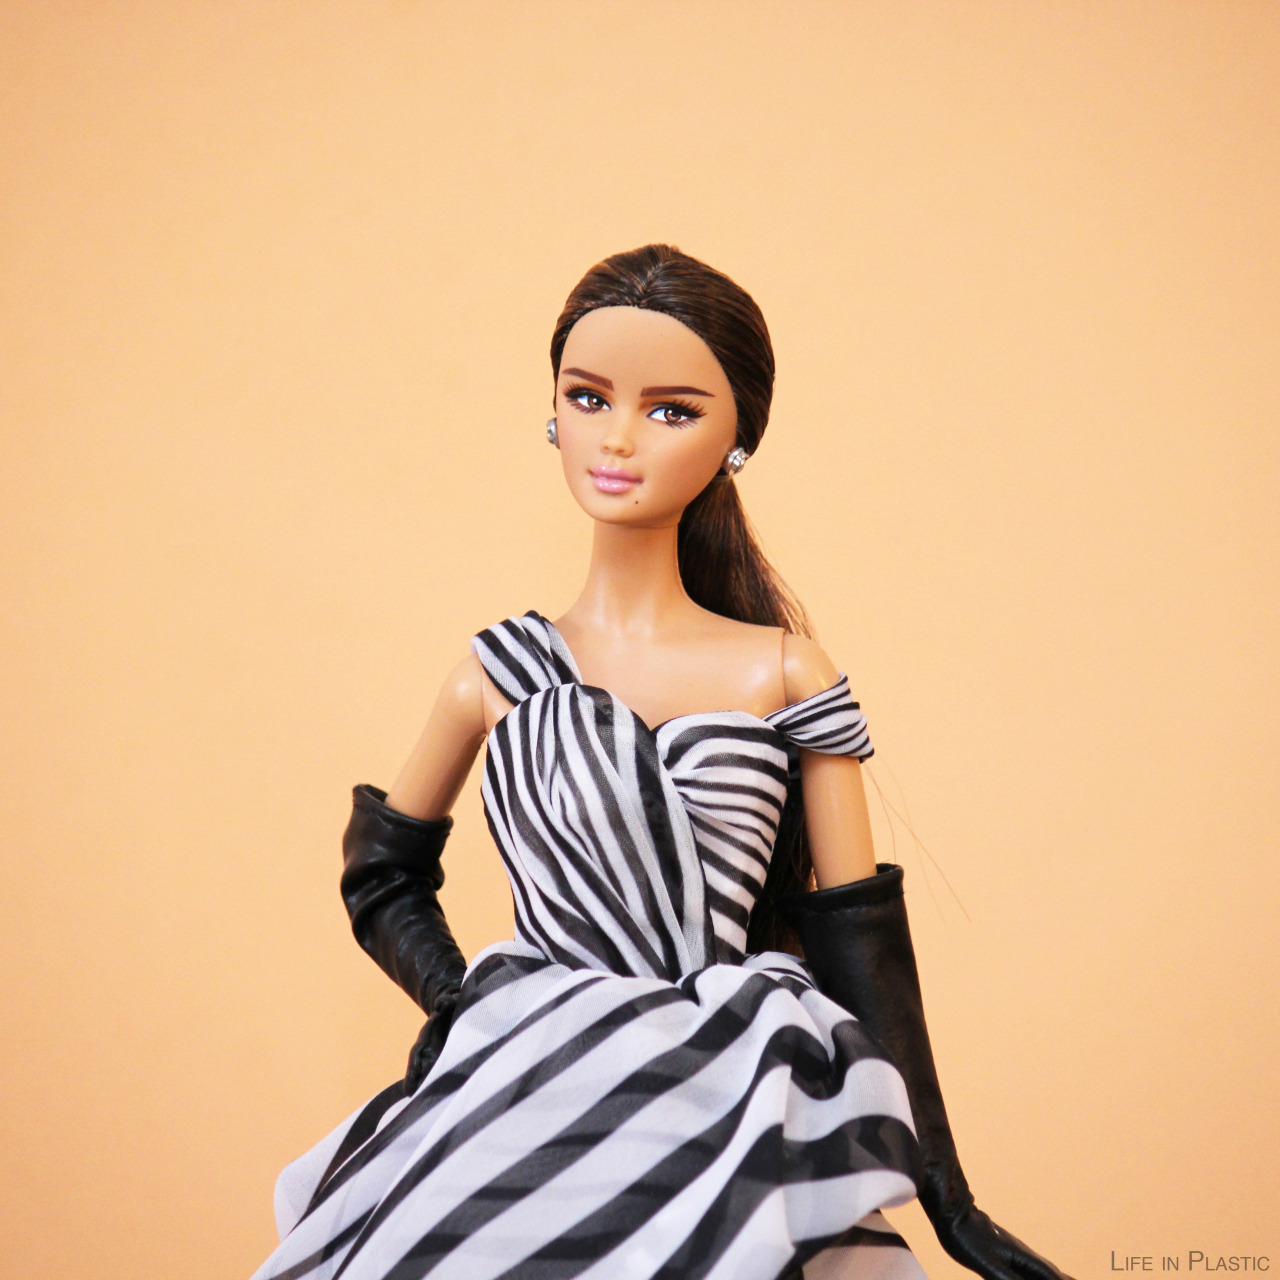 barbie chiffon ball gown